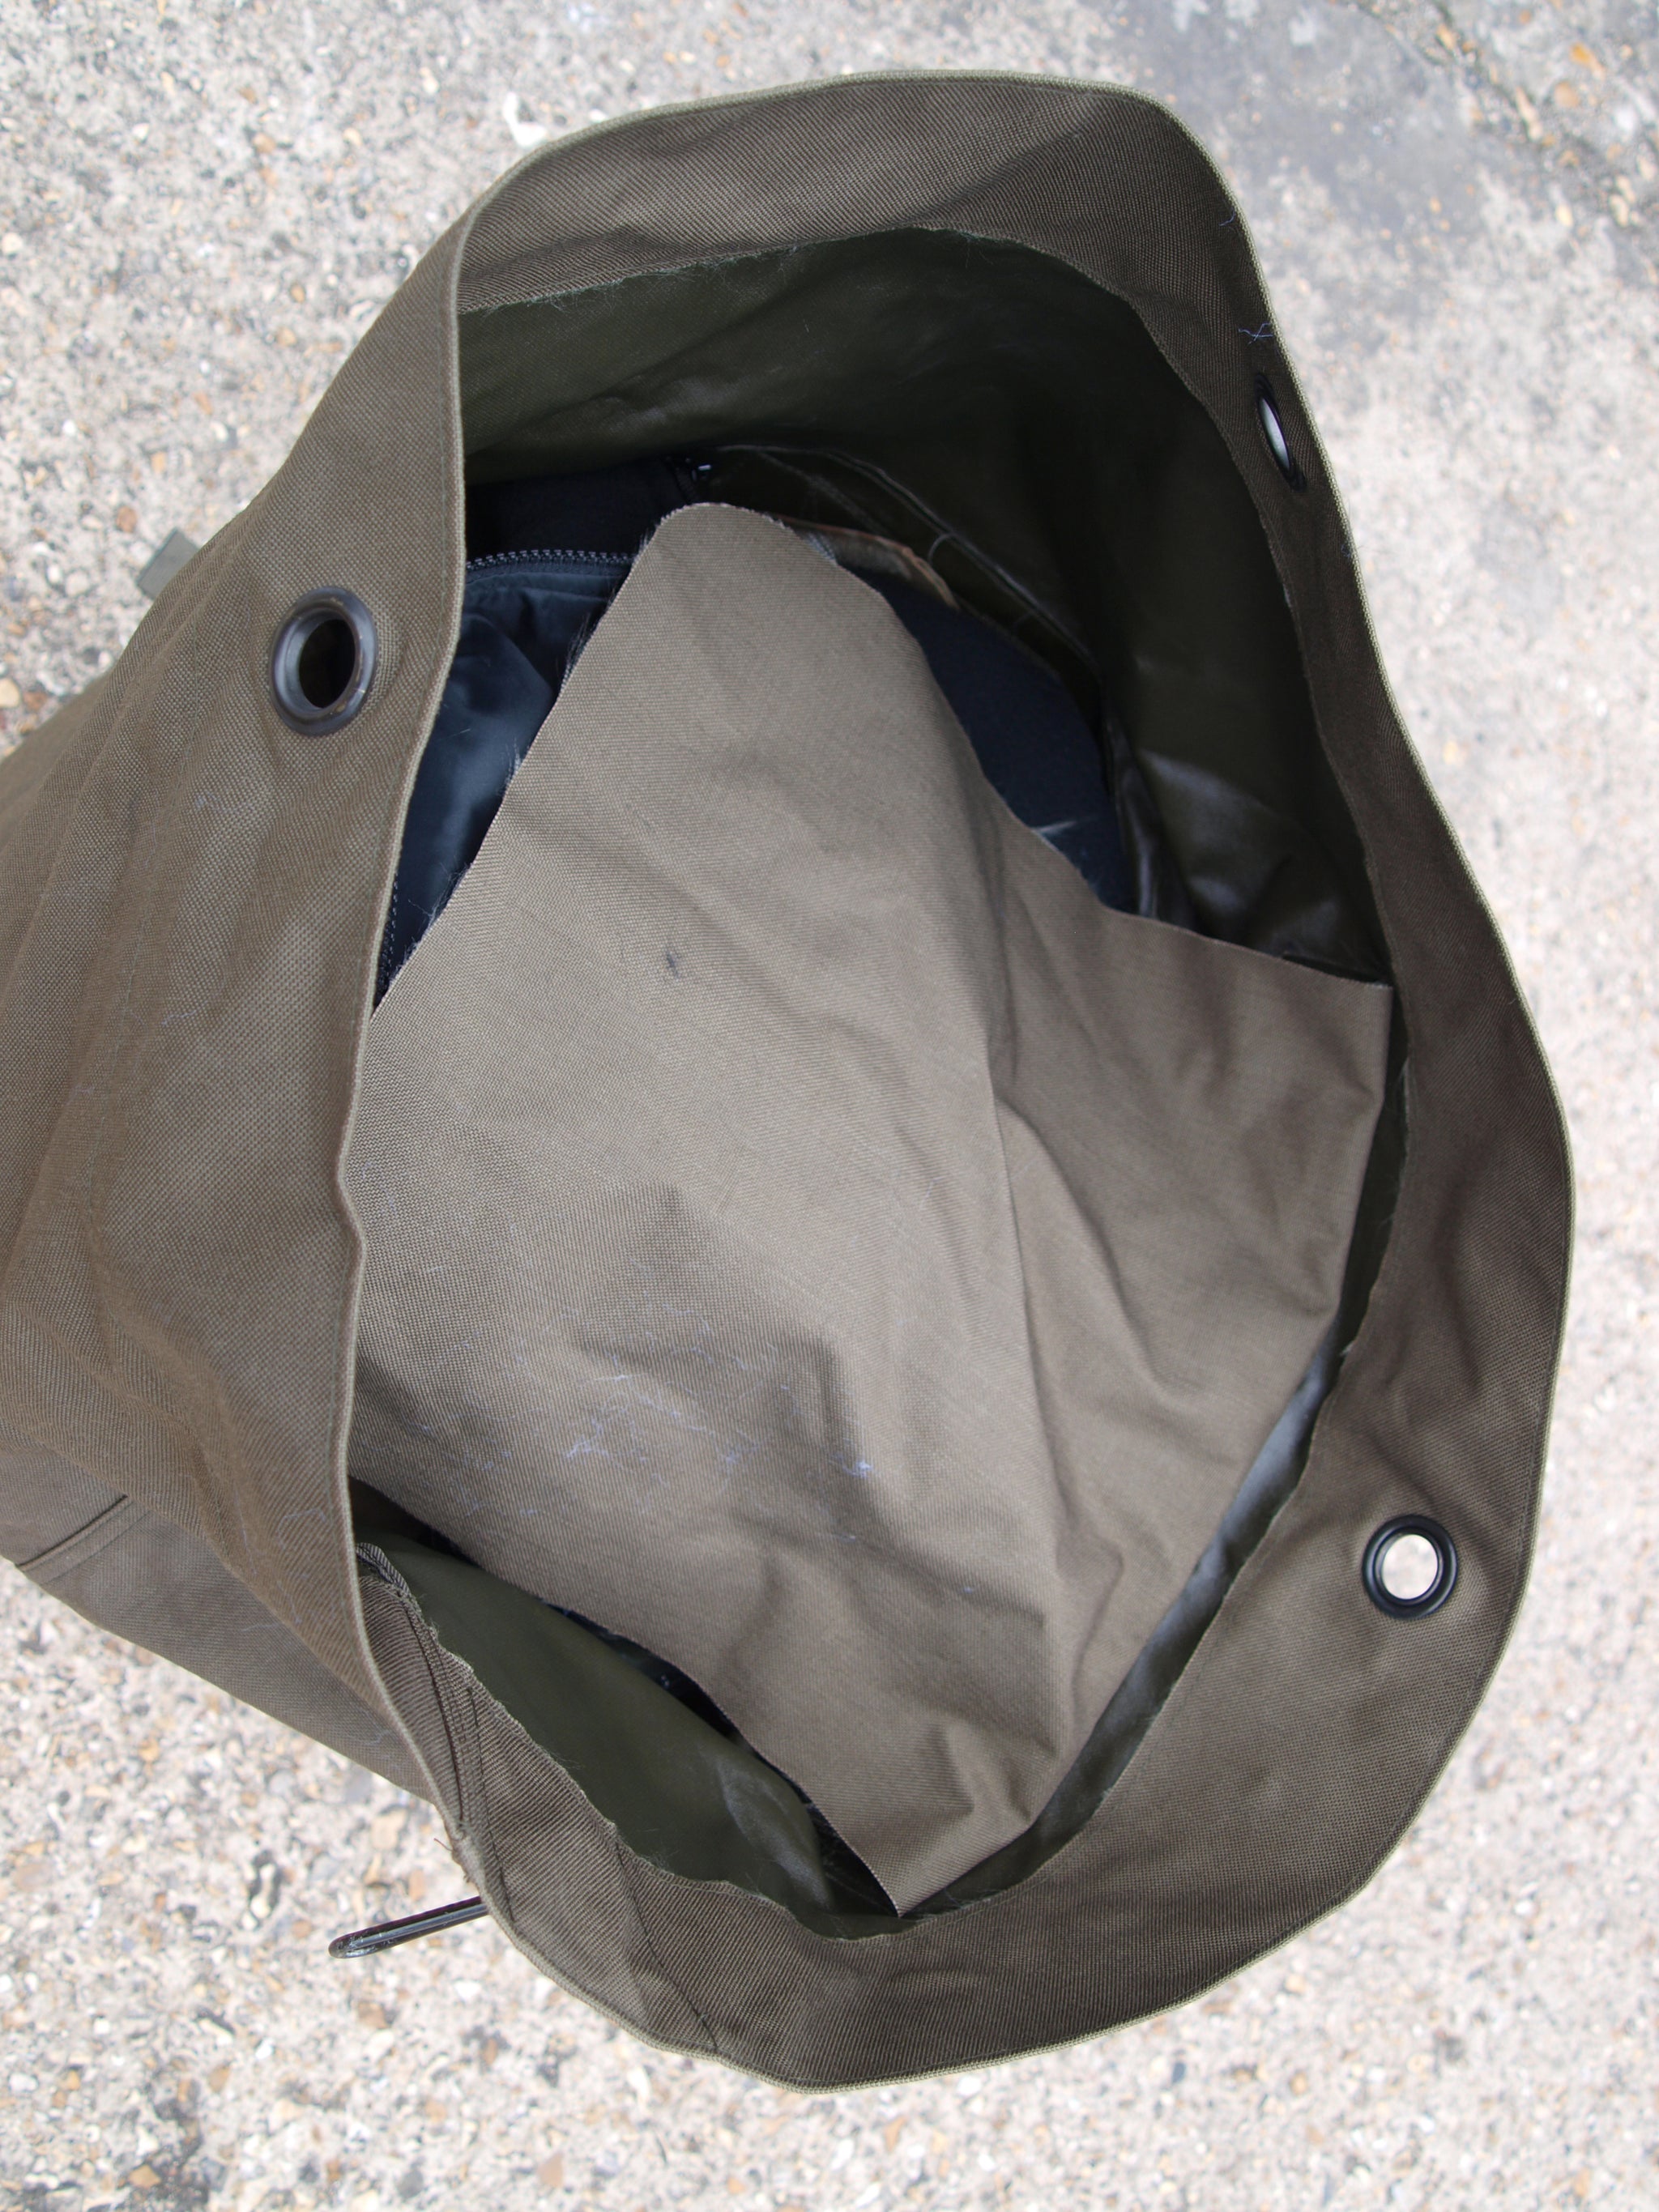 Austrian Large Capacity Kit Bag (Sea Sack) – 85 litre capacity